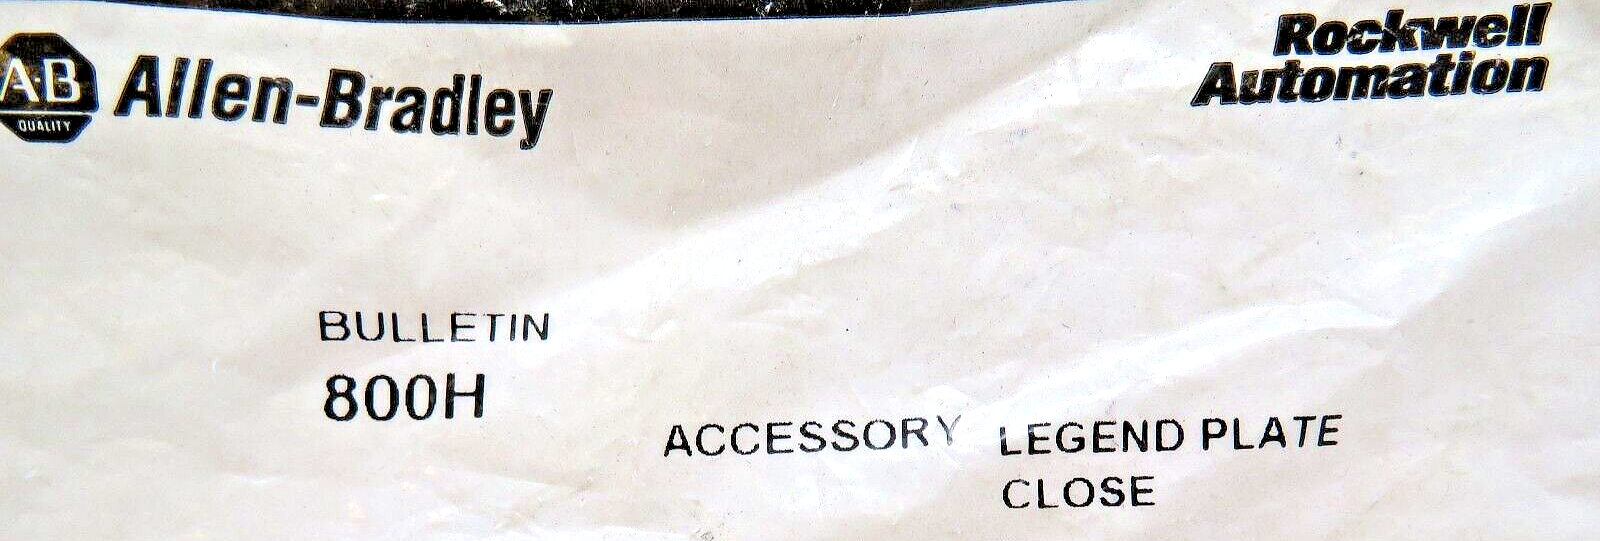 Allen-Bradley 800H-W101 Accessory Legend Plate CLOSE SER. D White Text On Black